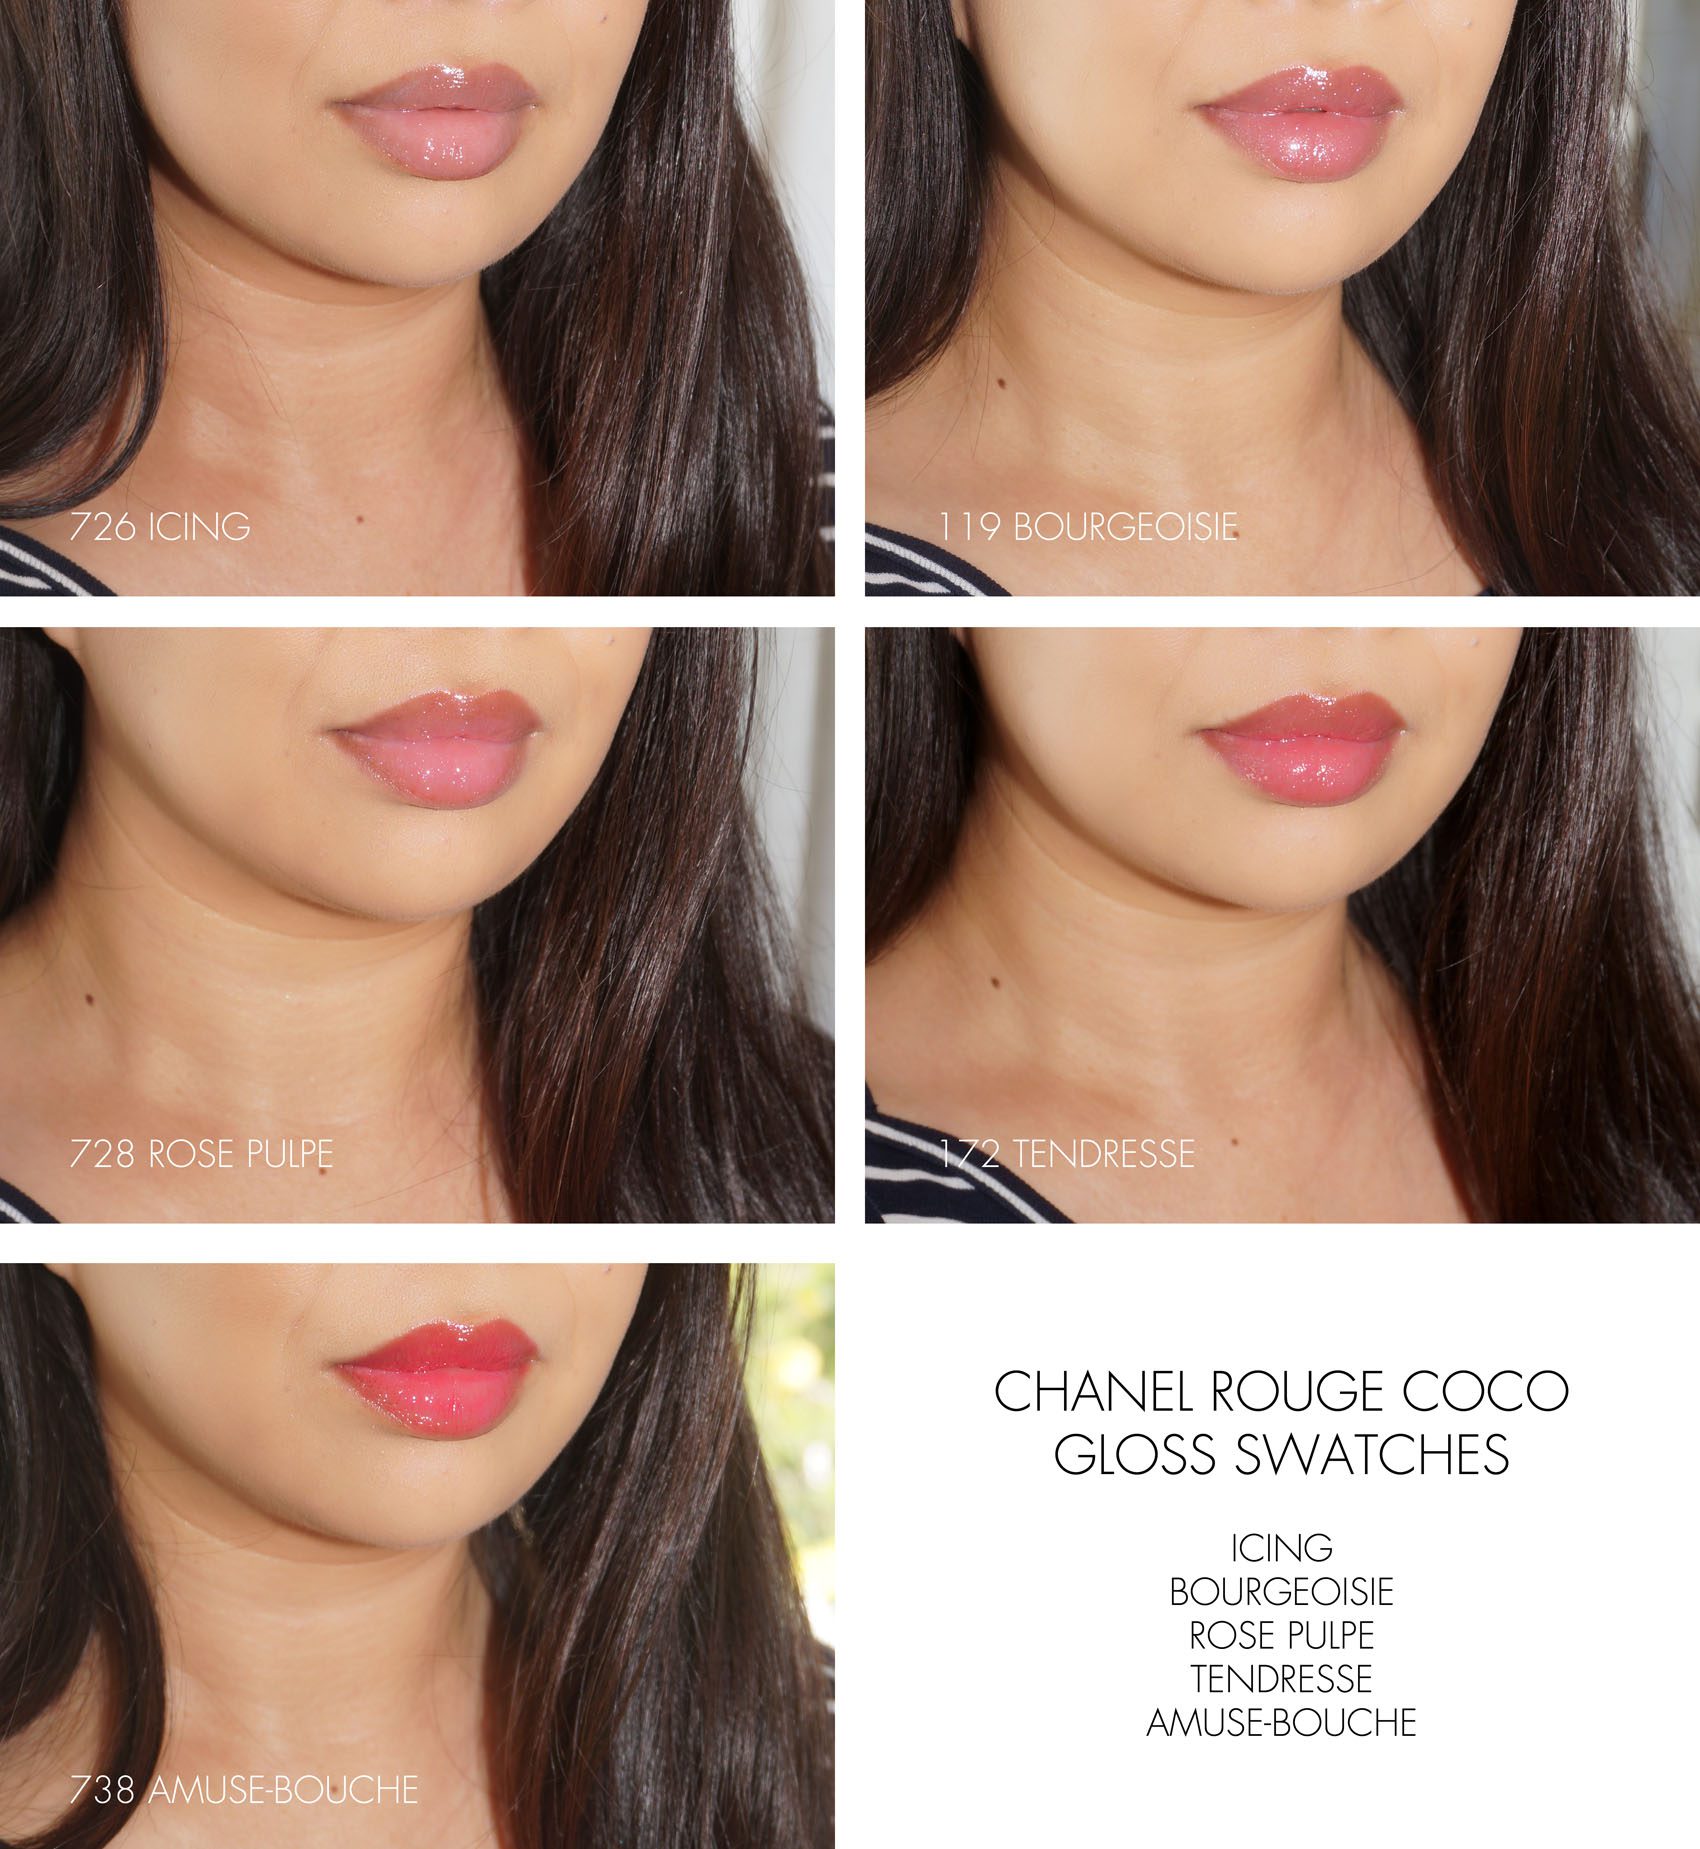 chanel lipstick long lasting